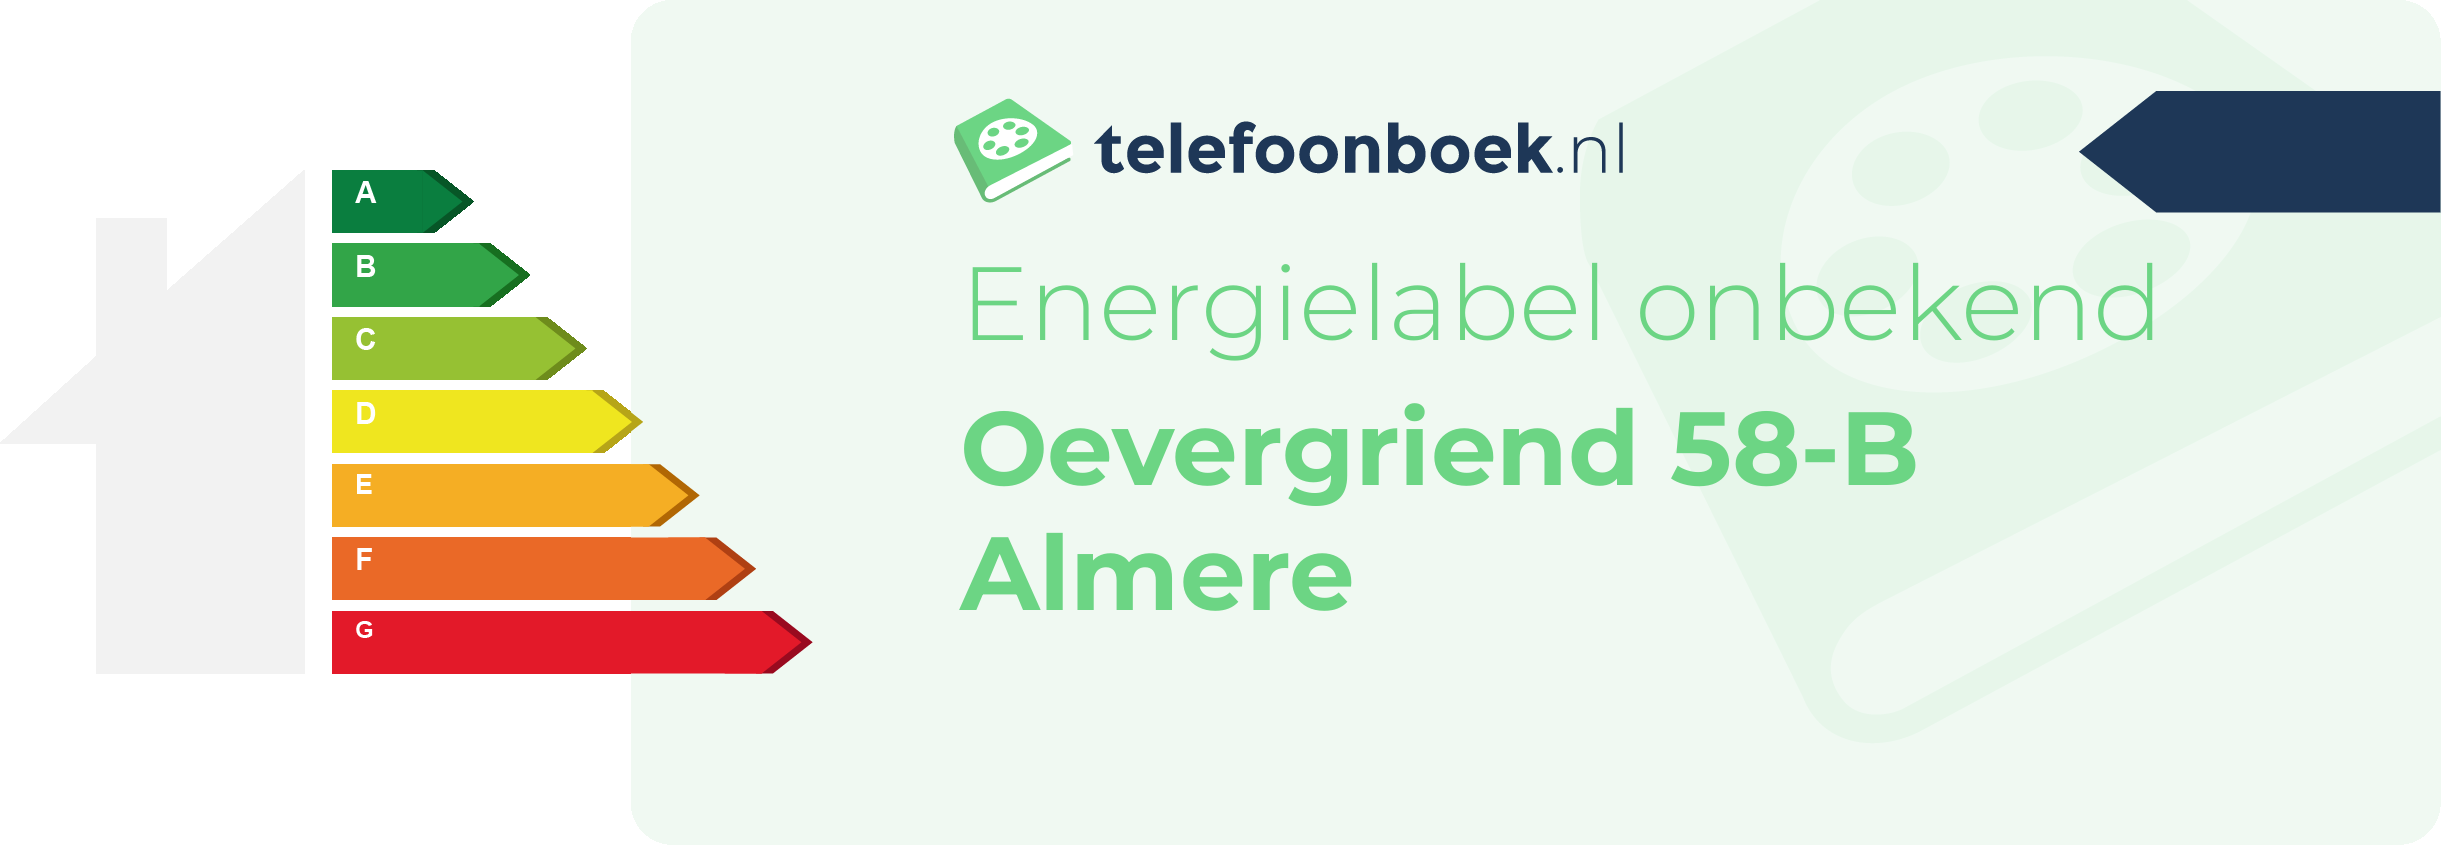 Energielabel Oevergriend 58-B Almere